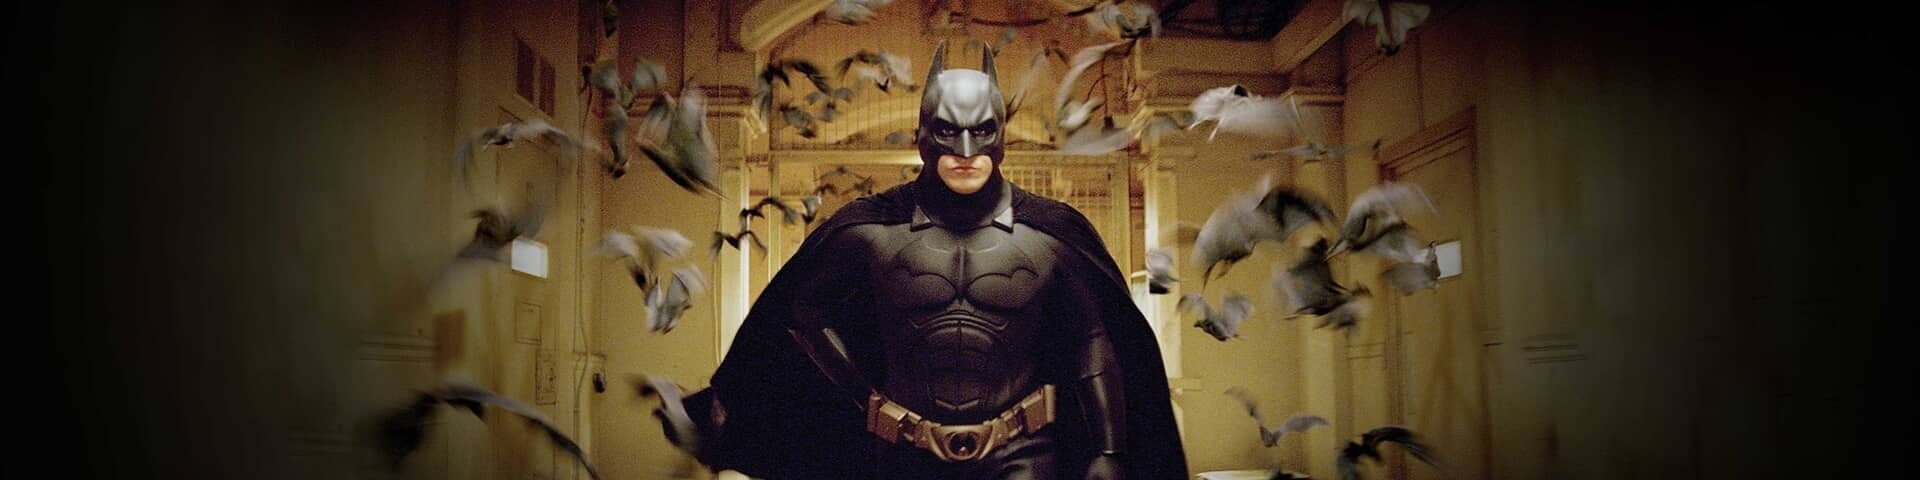 Warnerbros Com Batman Begins Movies